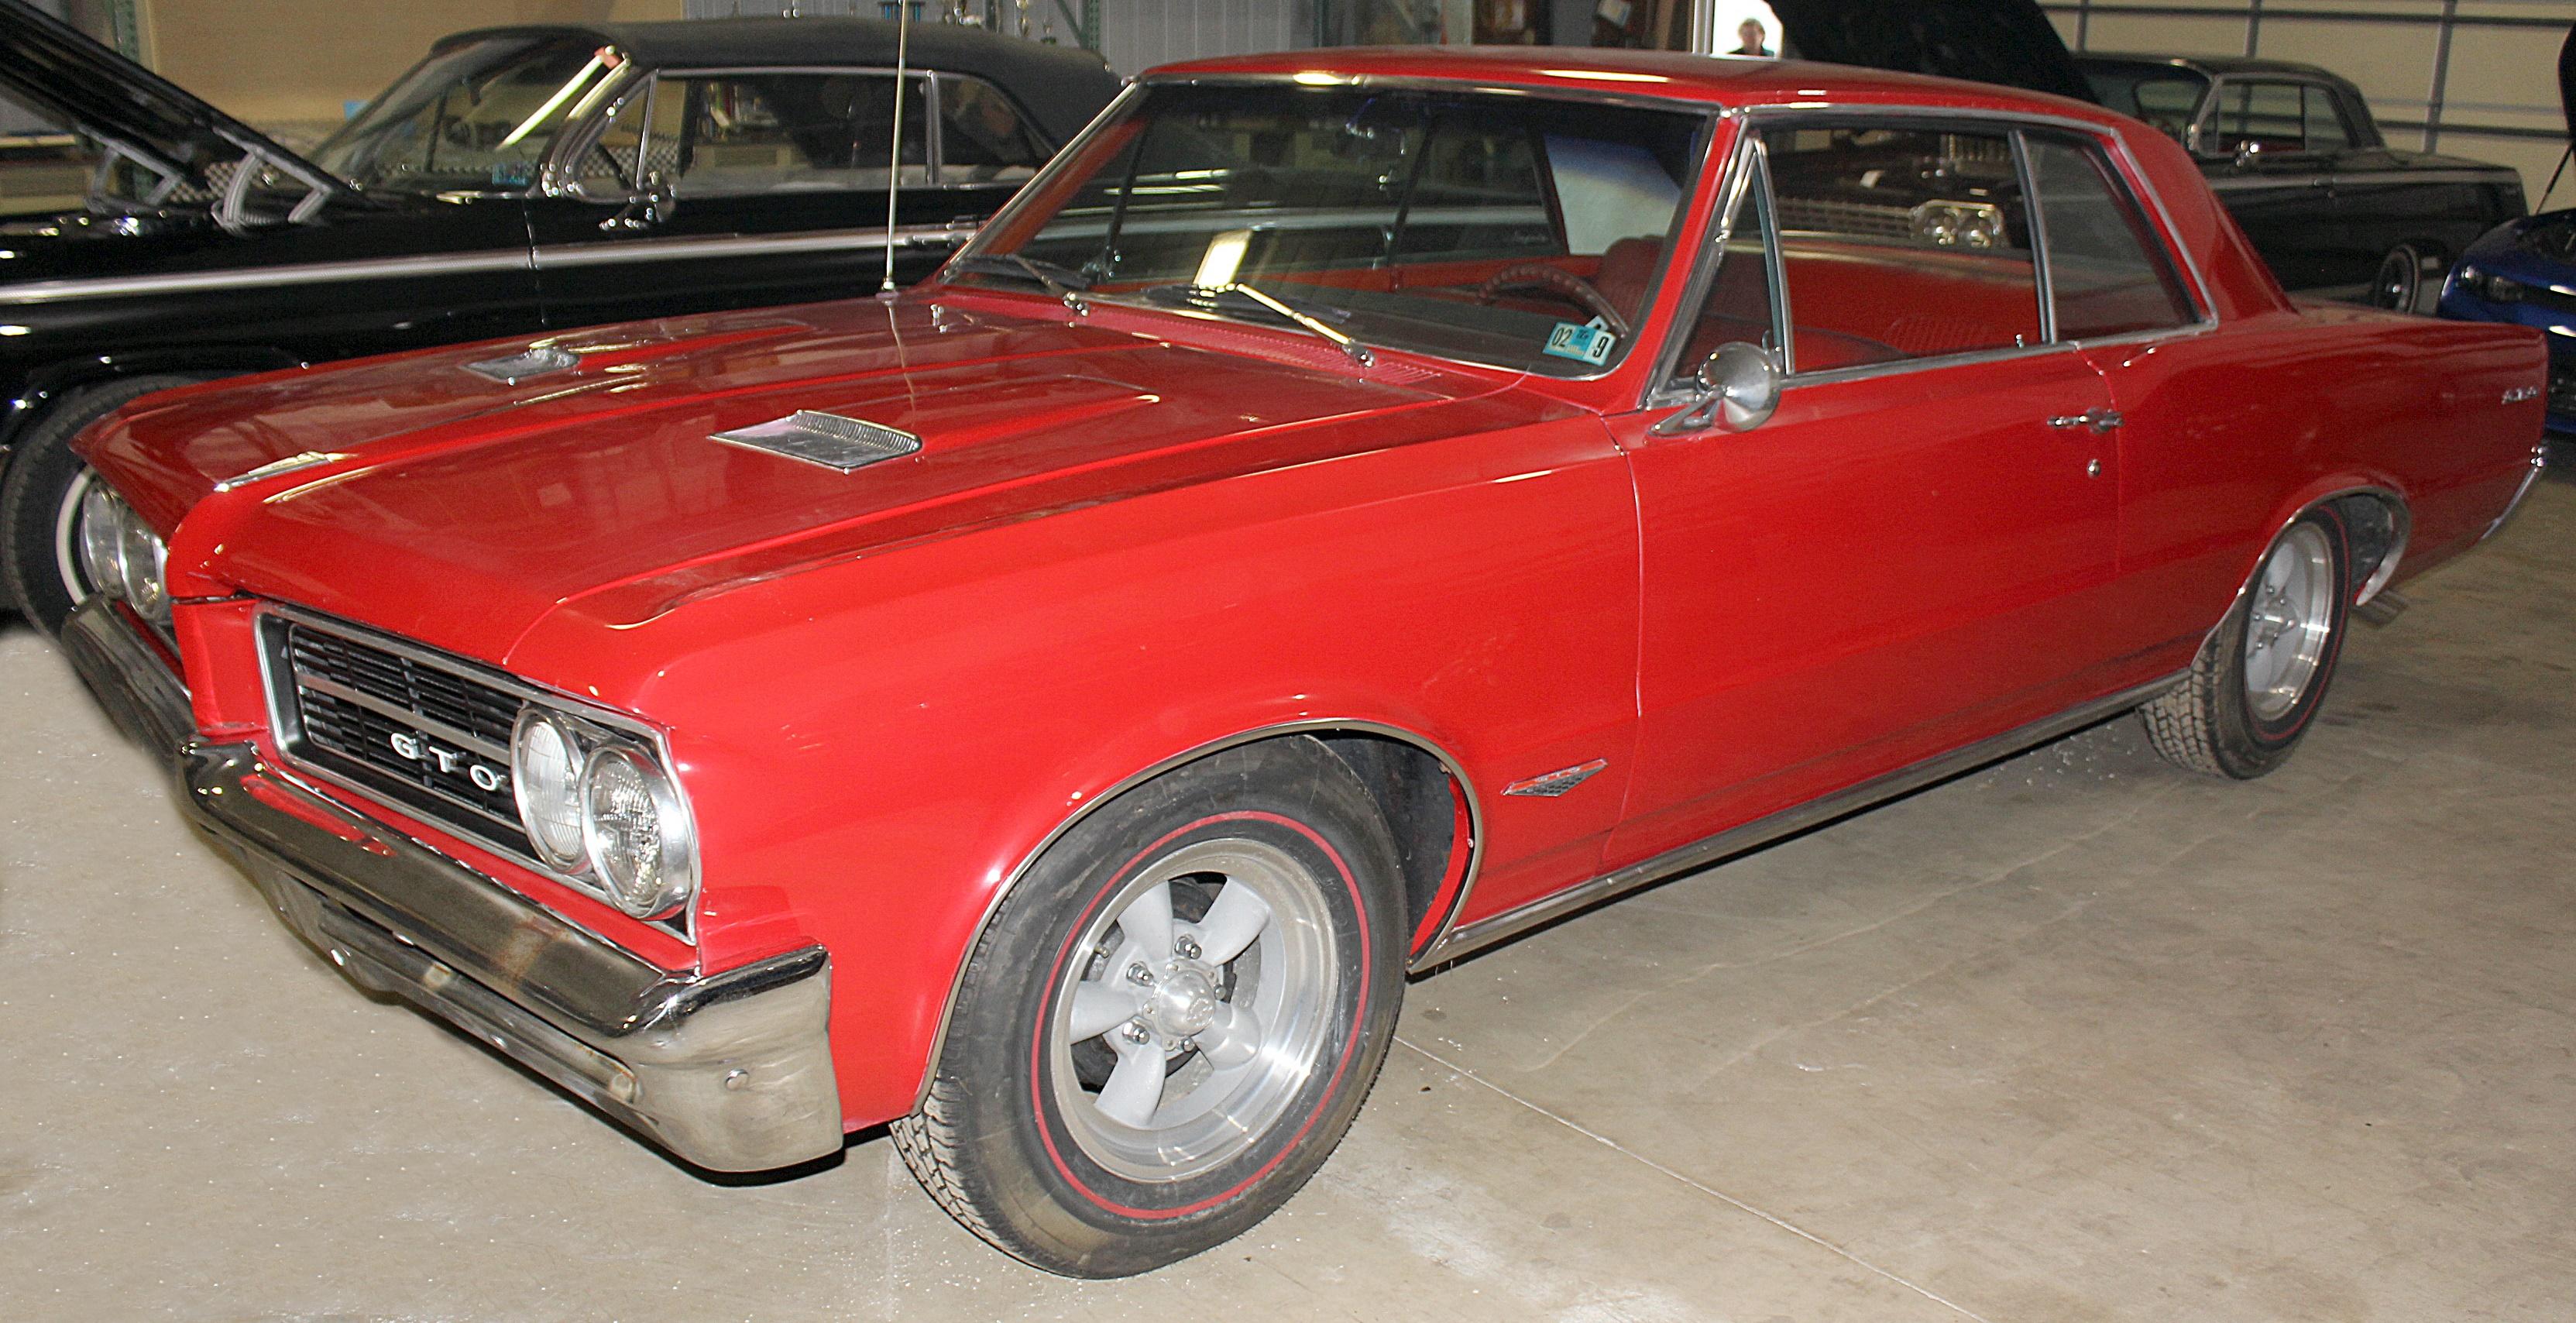 1964 Pontiac GTO, 389 eng. with (3) 2 barrel carbs